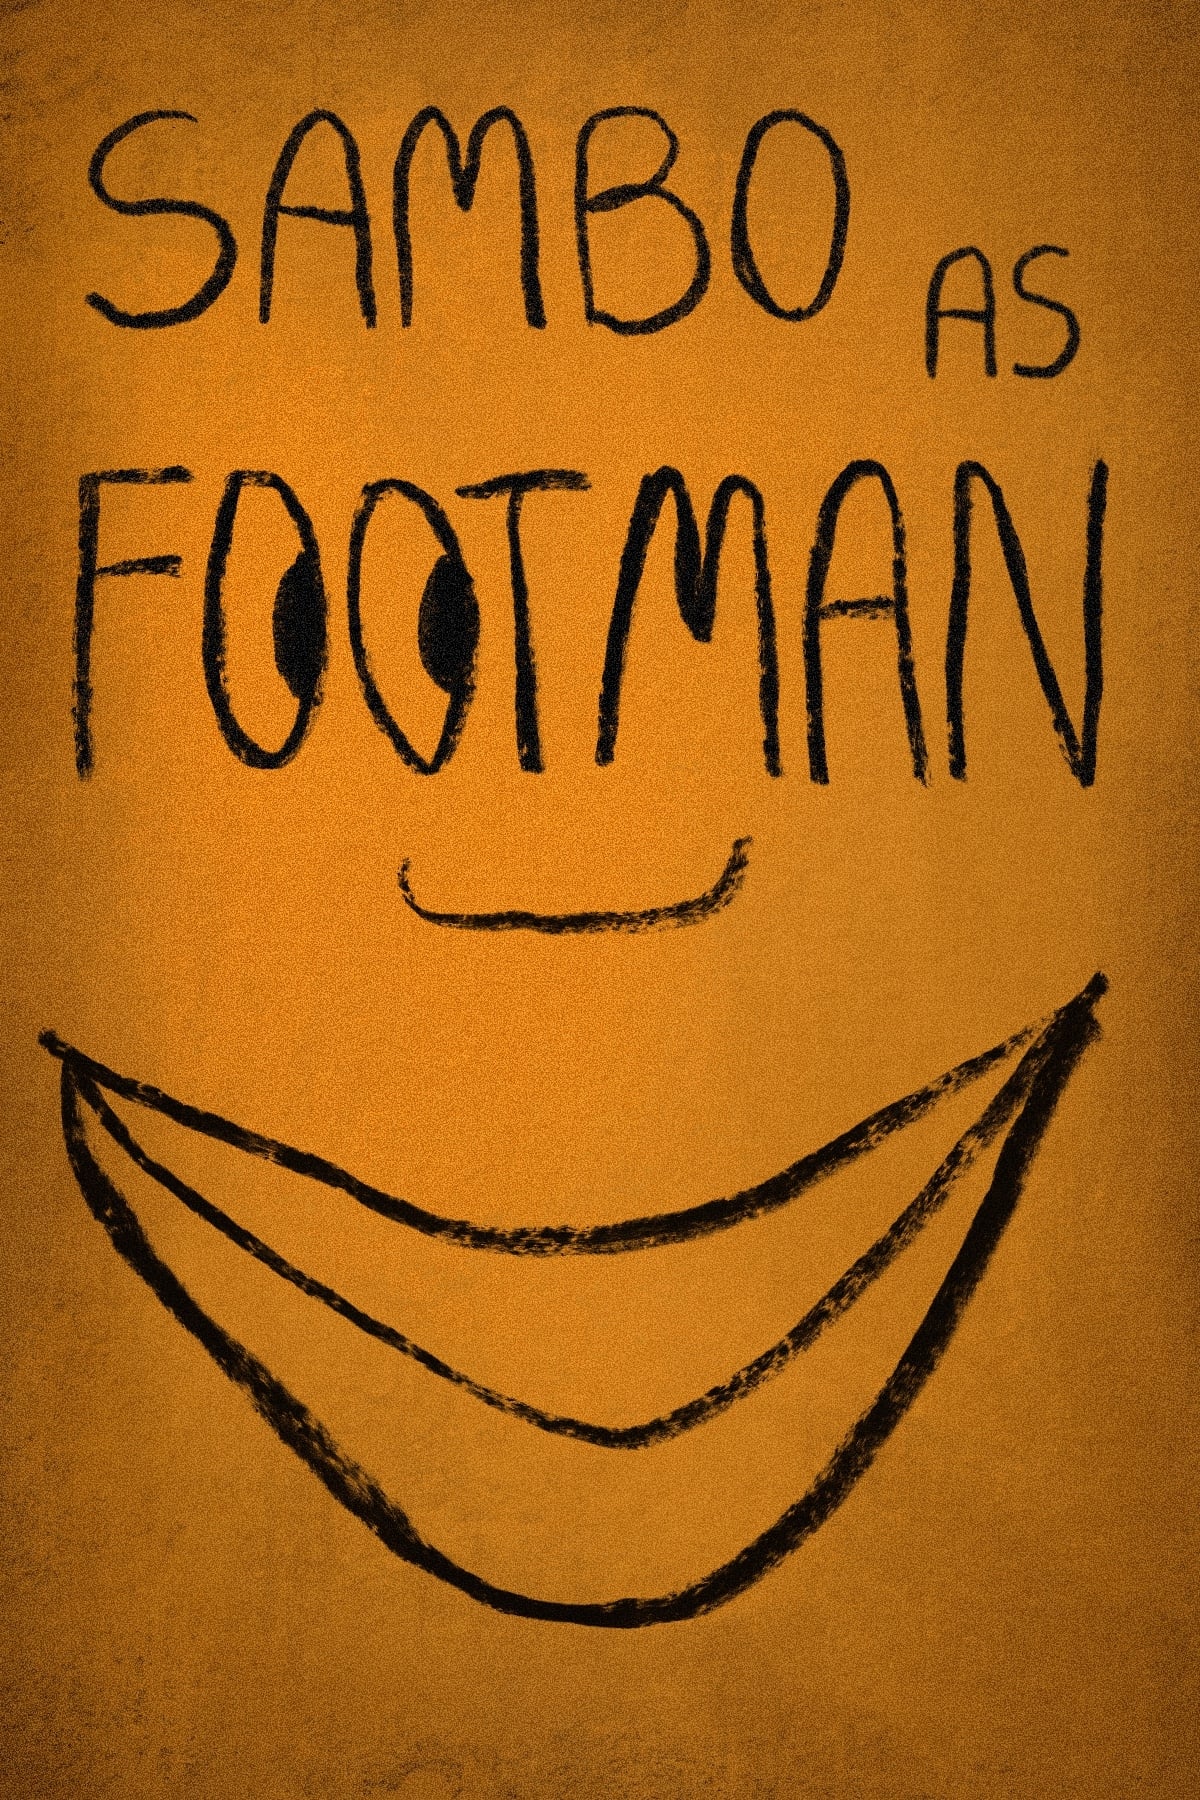 Sambo as Footman